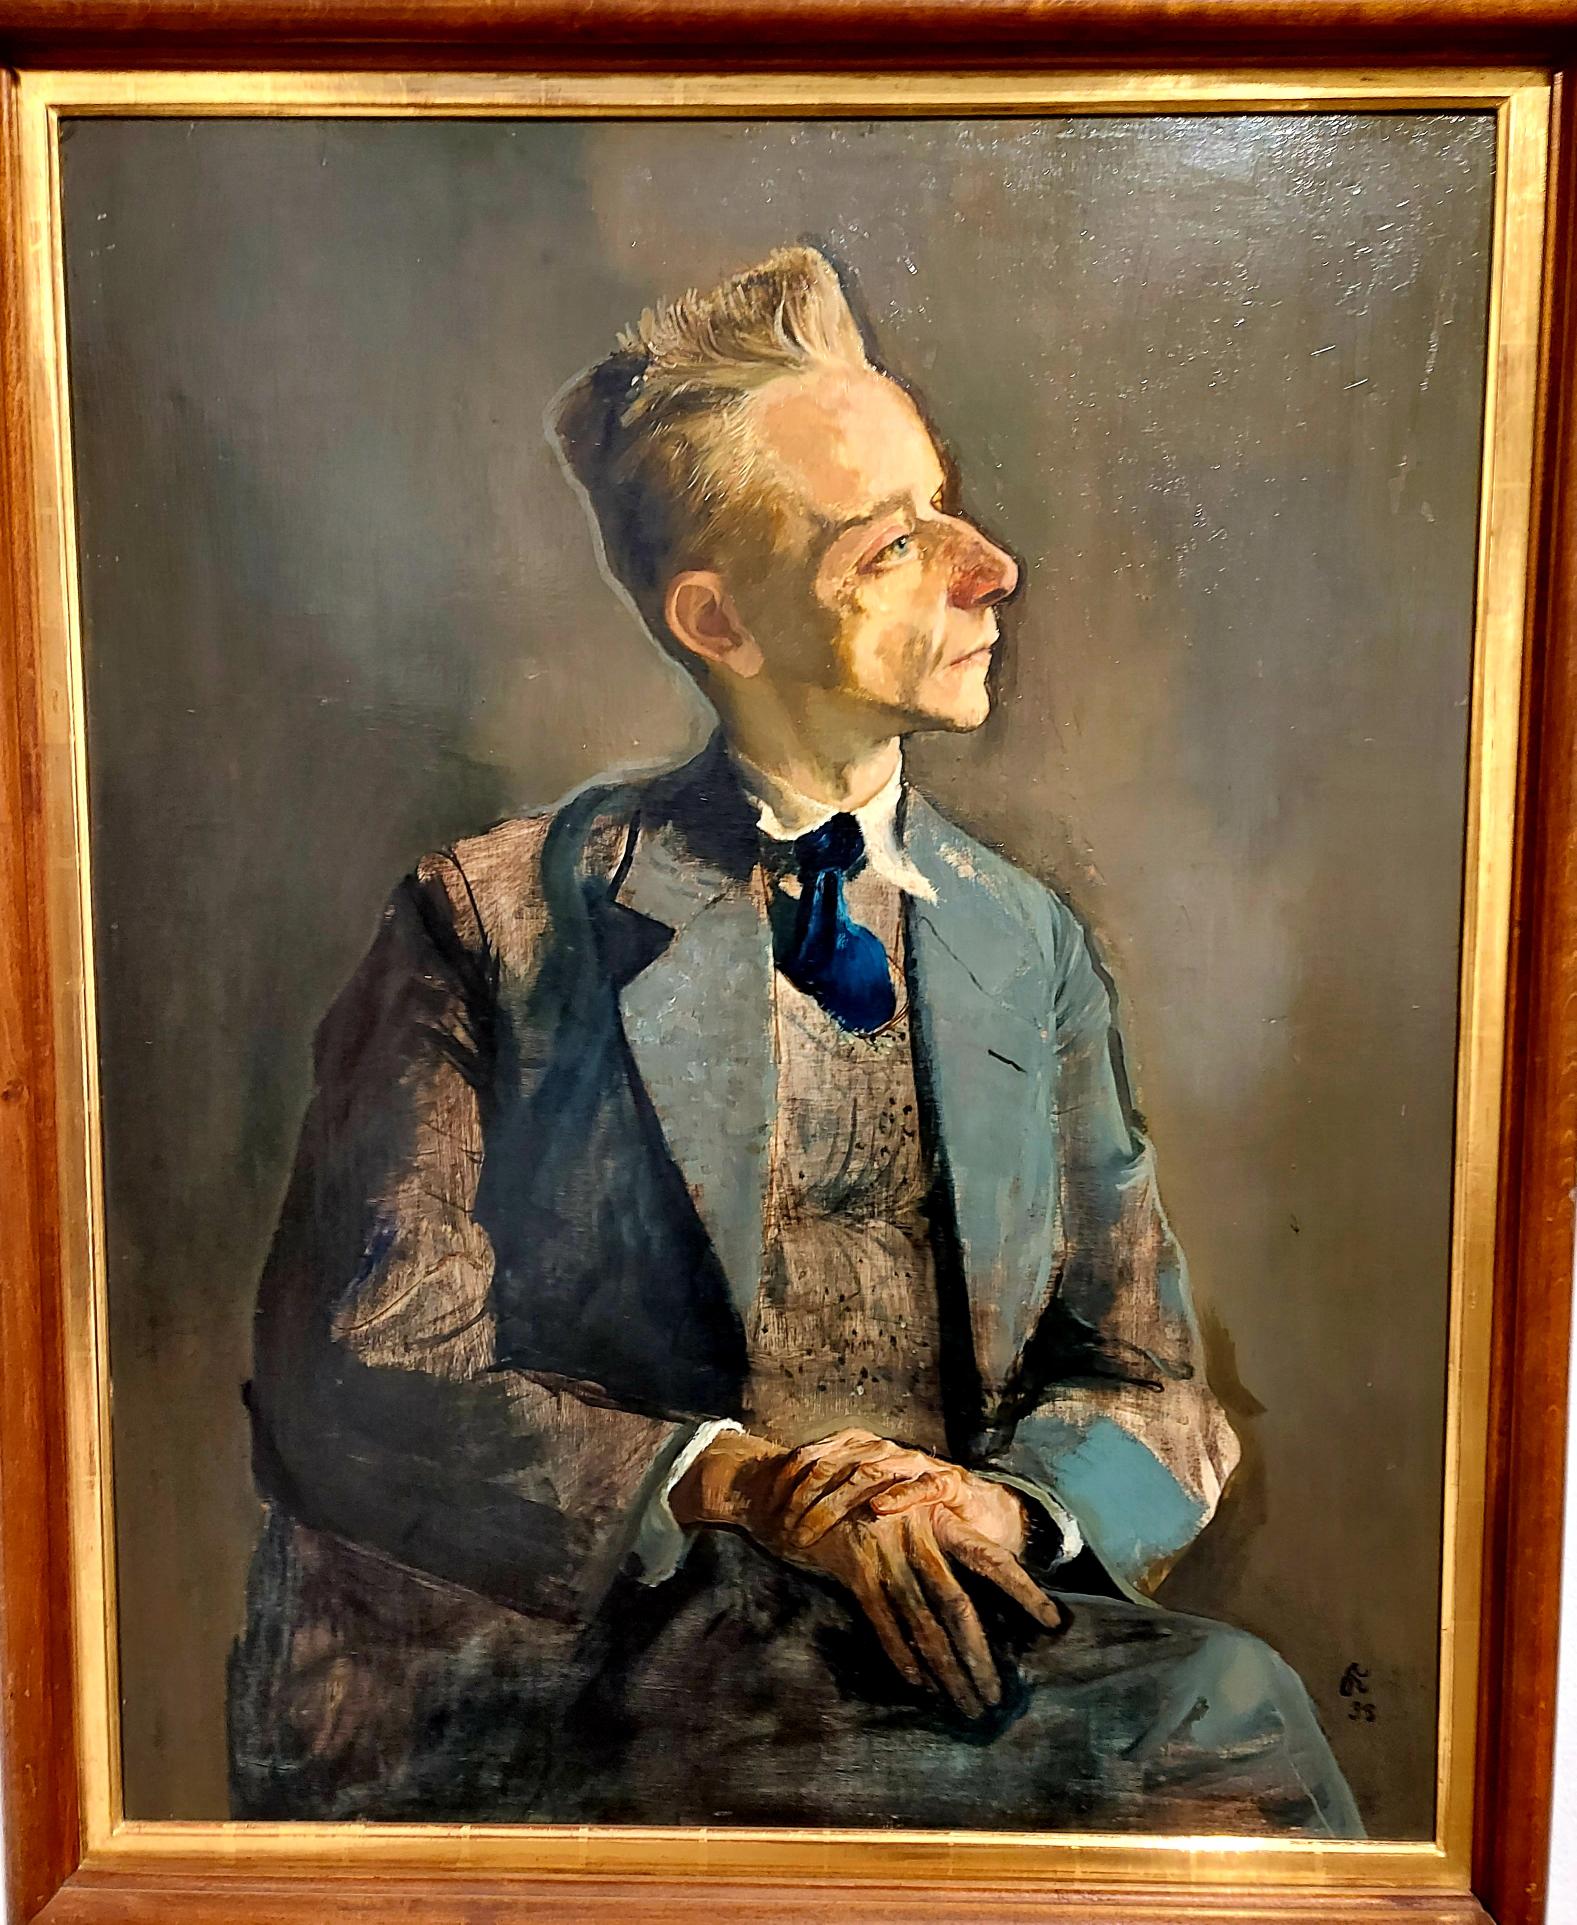 Willi Kriegel (1901 - 1966): "Porträt Willy Eberl", 1933